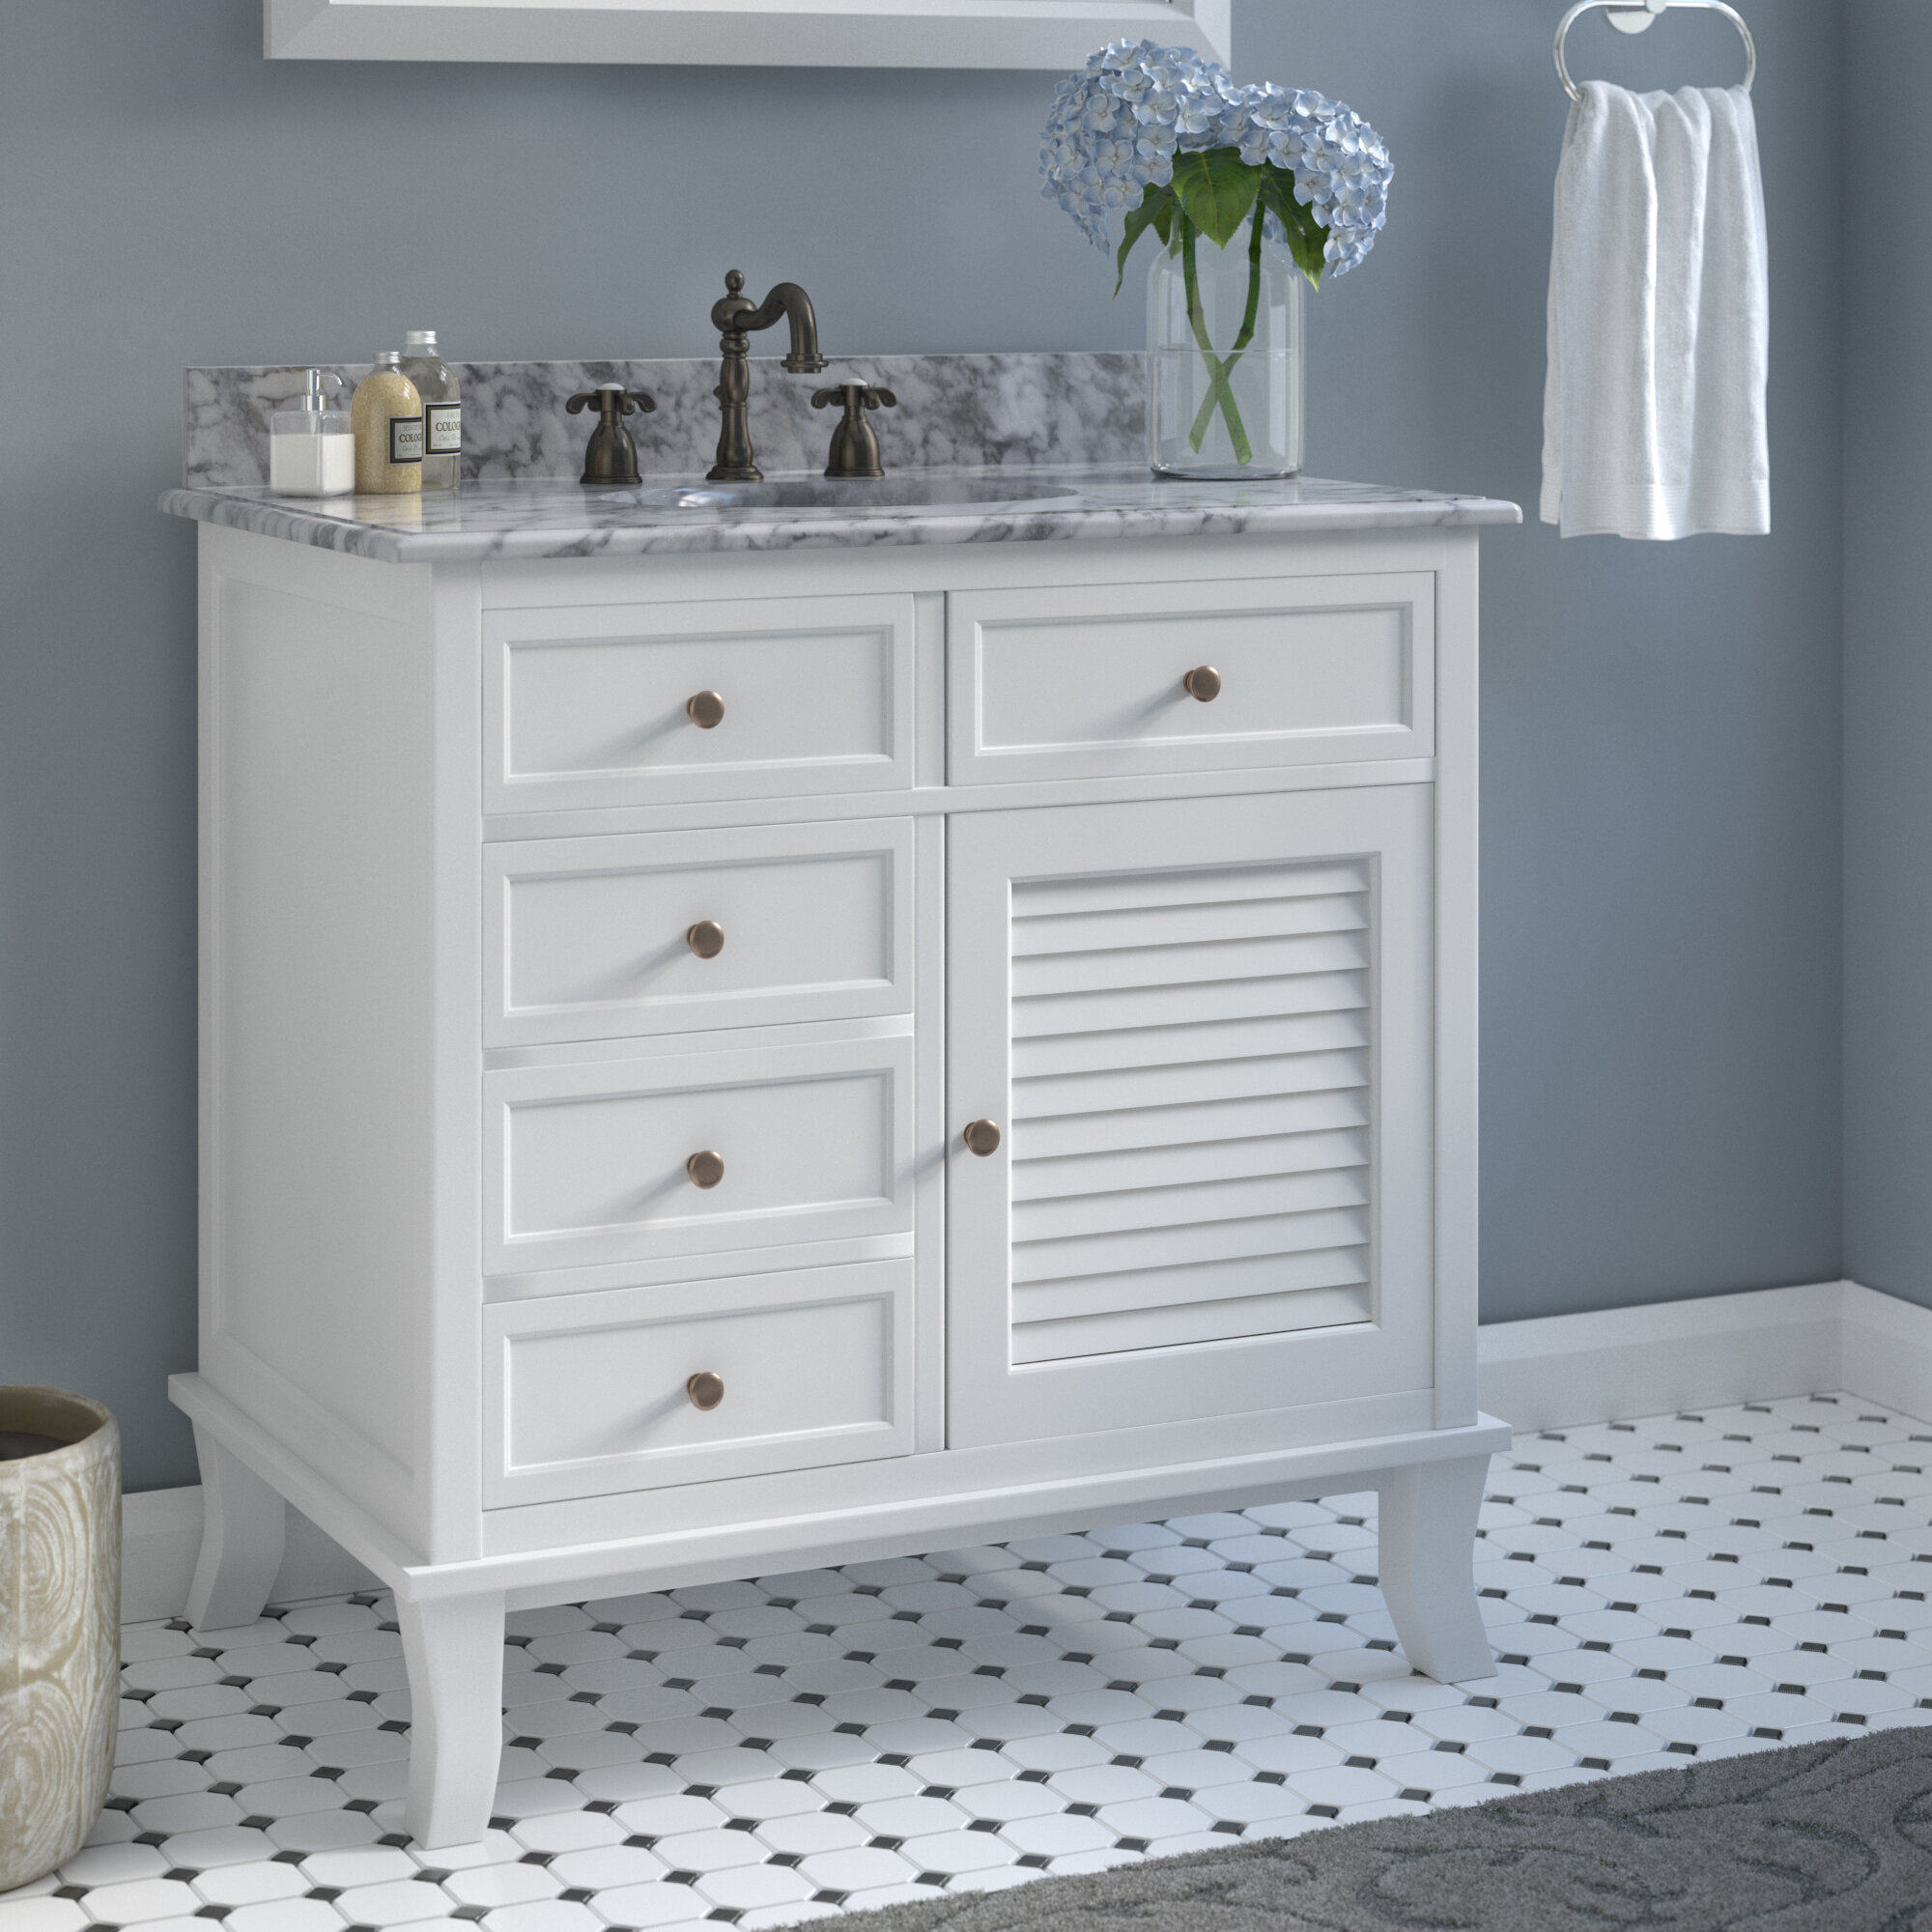 Red Barrel Studio Doris 34 Single Bathroom Vanity Set With Marble Counter Top Reviews Wayfair